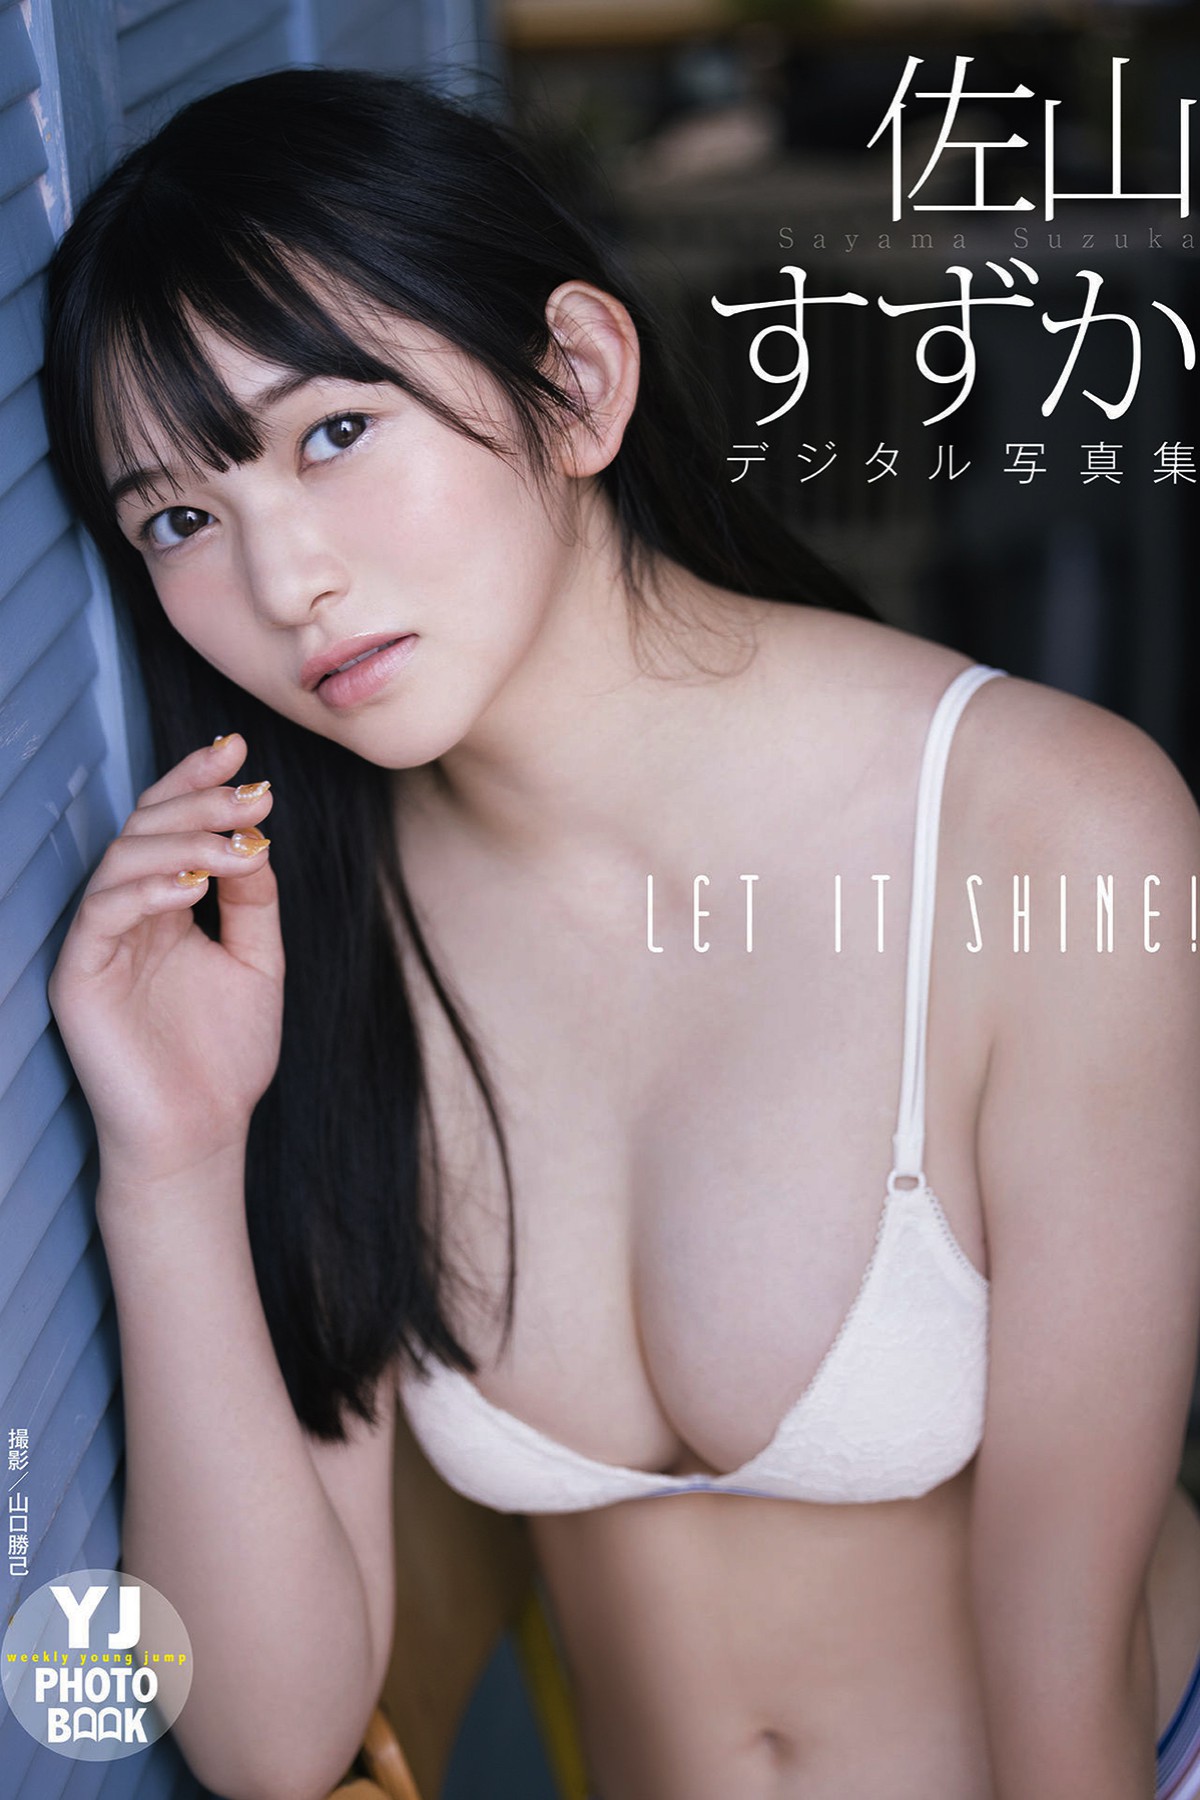 YJ Photobook 2021-09-22 Suzuka Sayama 佐山すずか – Let It Shine